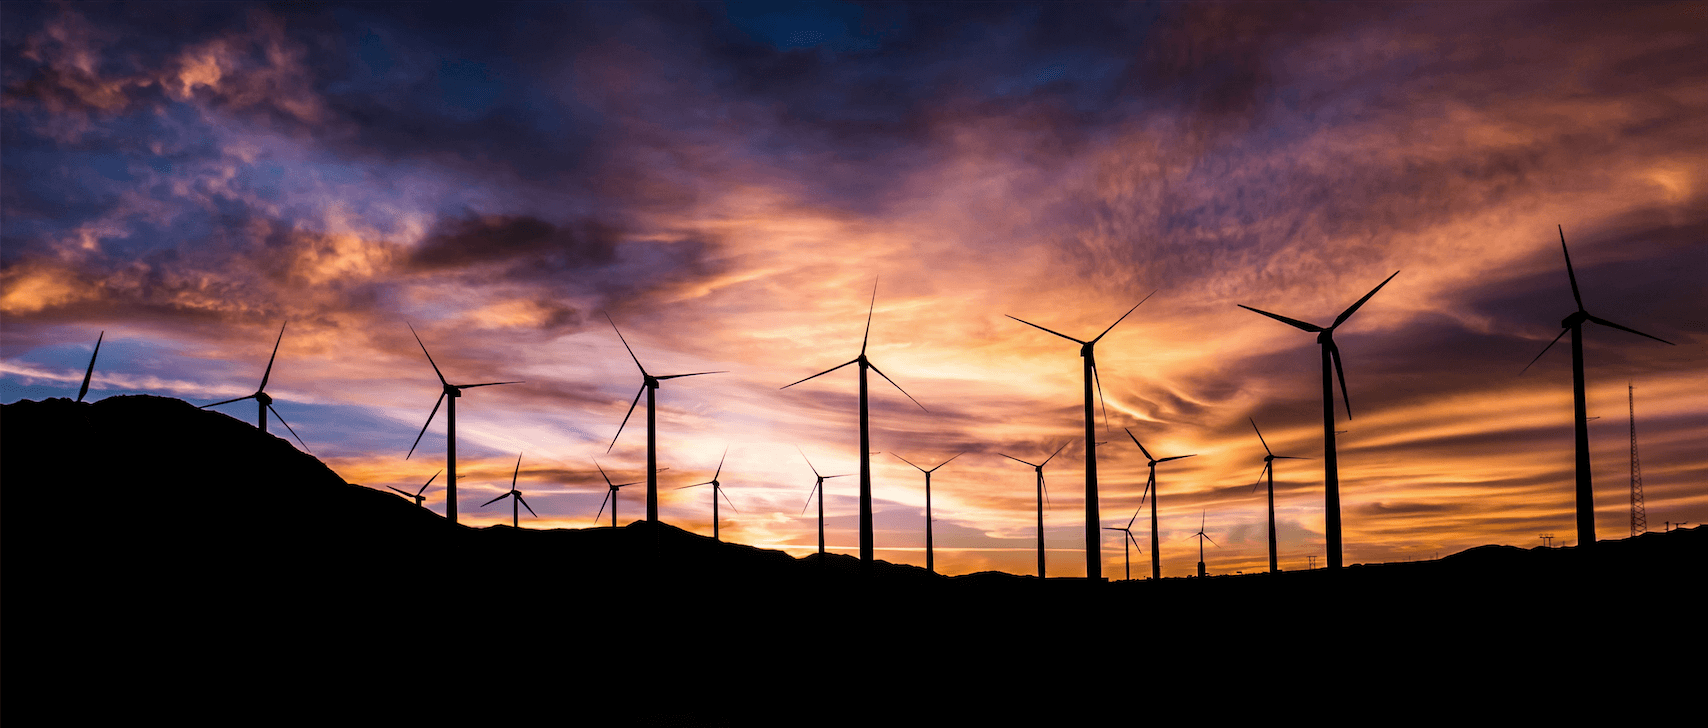 landscape of wind farm at sunset